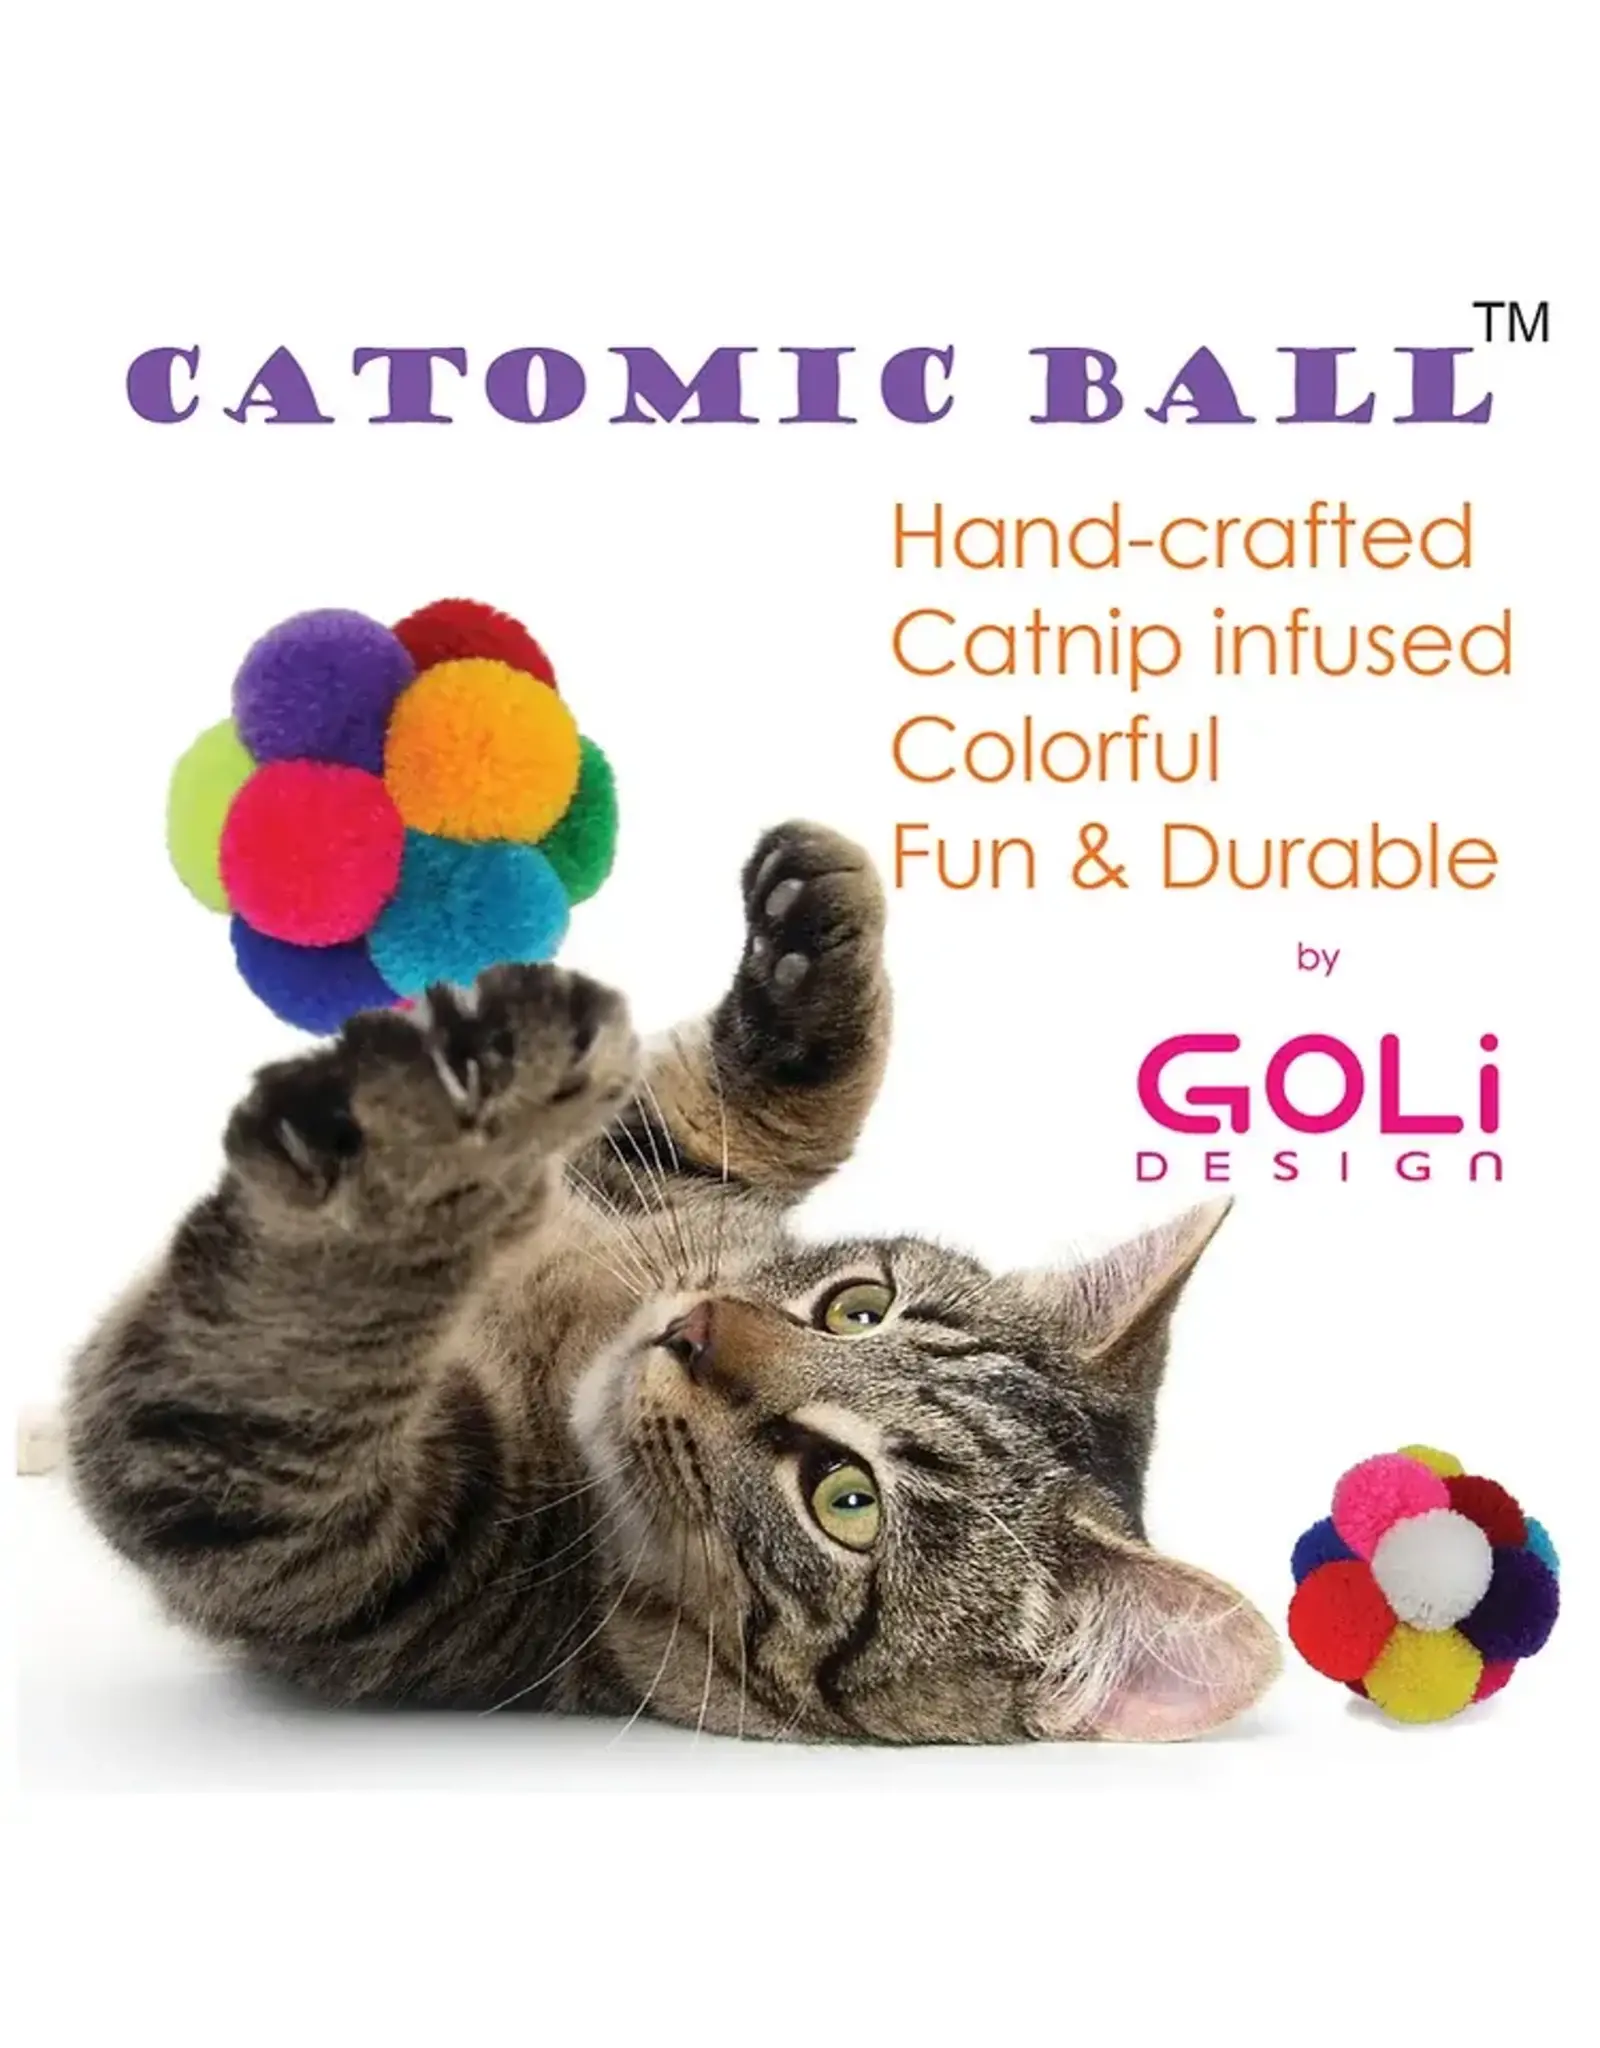 Goli Goli Catomic Balls Catnip Infused